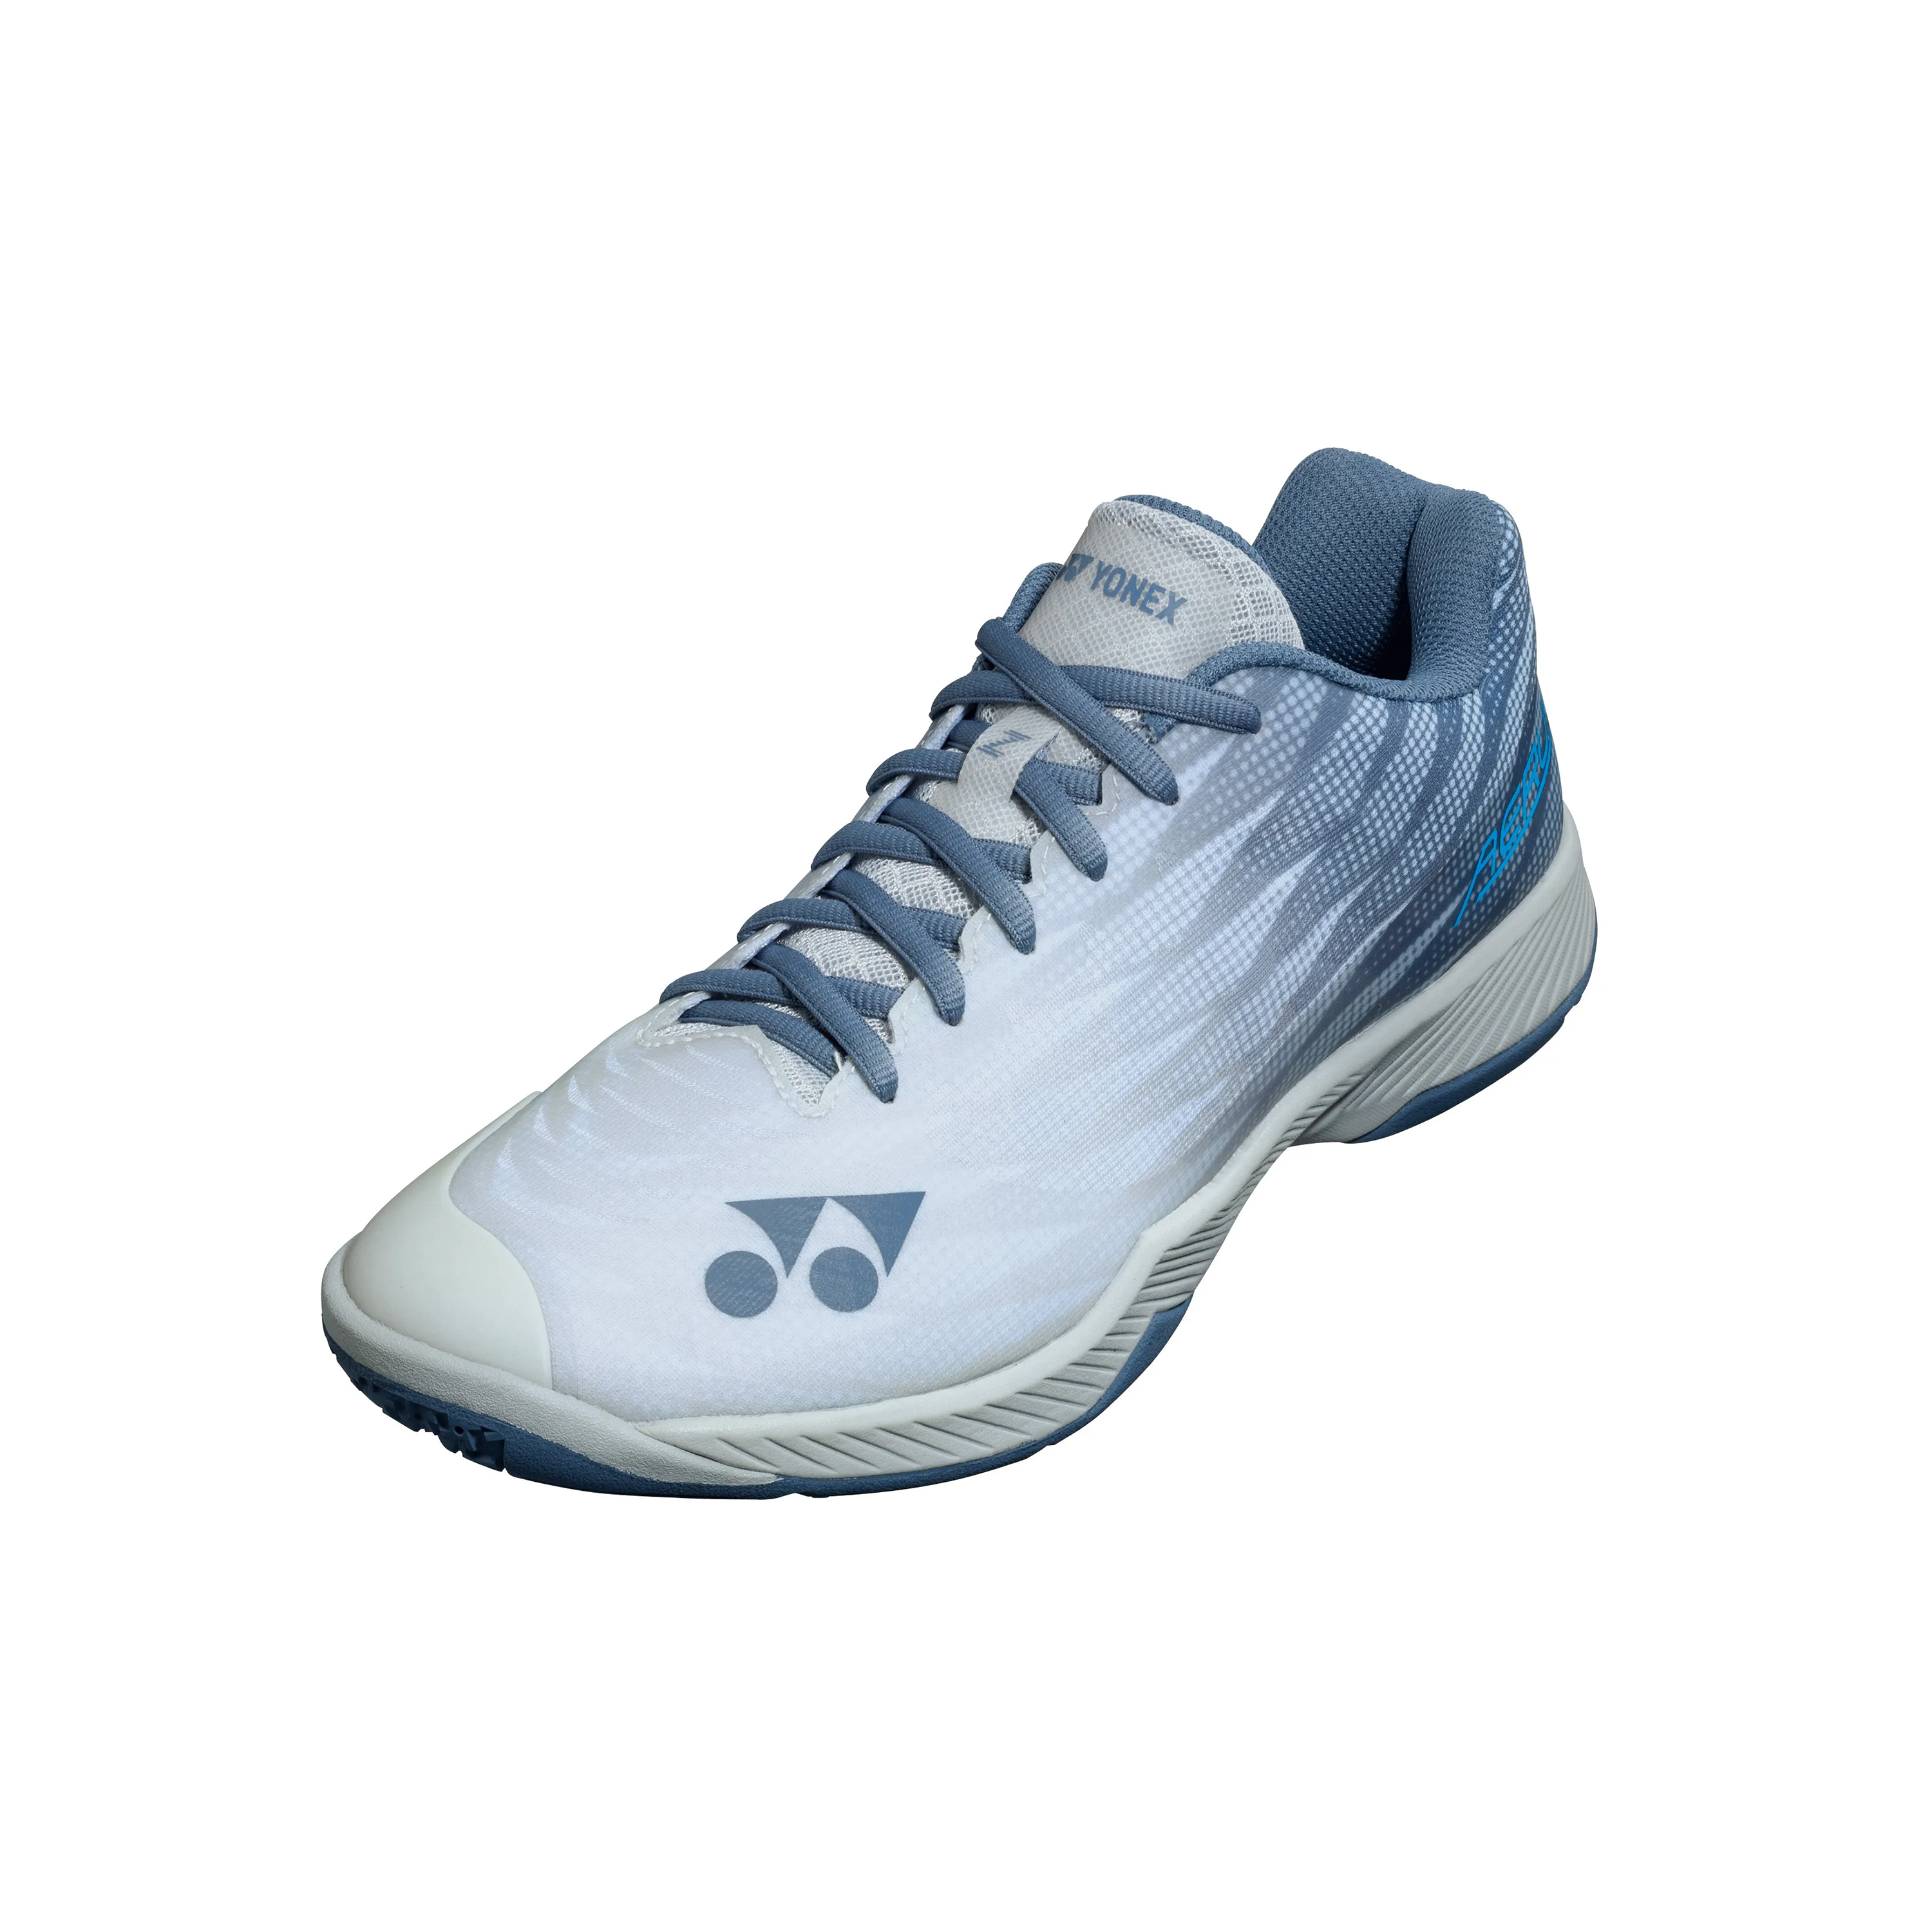 Yonex Power Cushion AERUS Z Badminton Shoes Blue Gray MEN'S (Clearance)